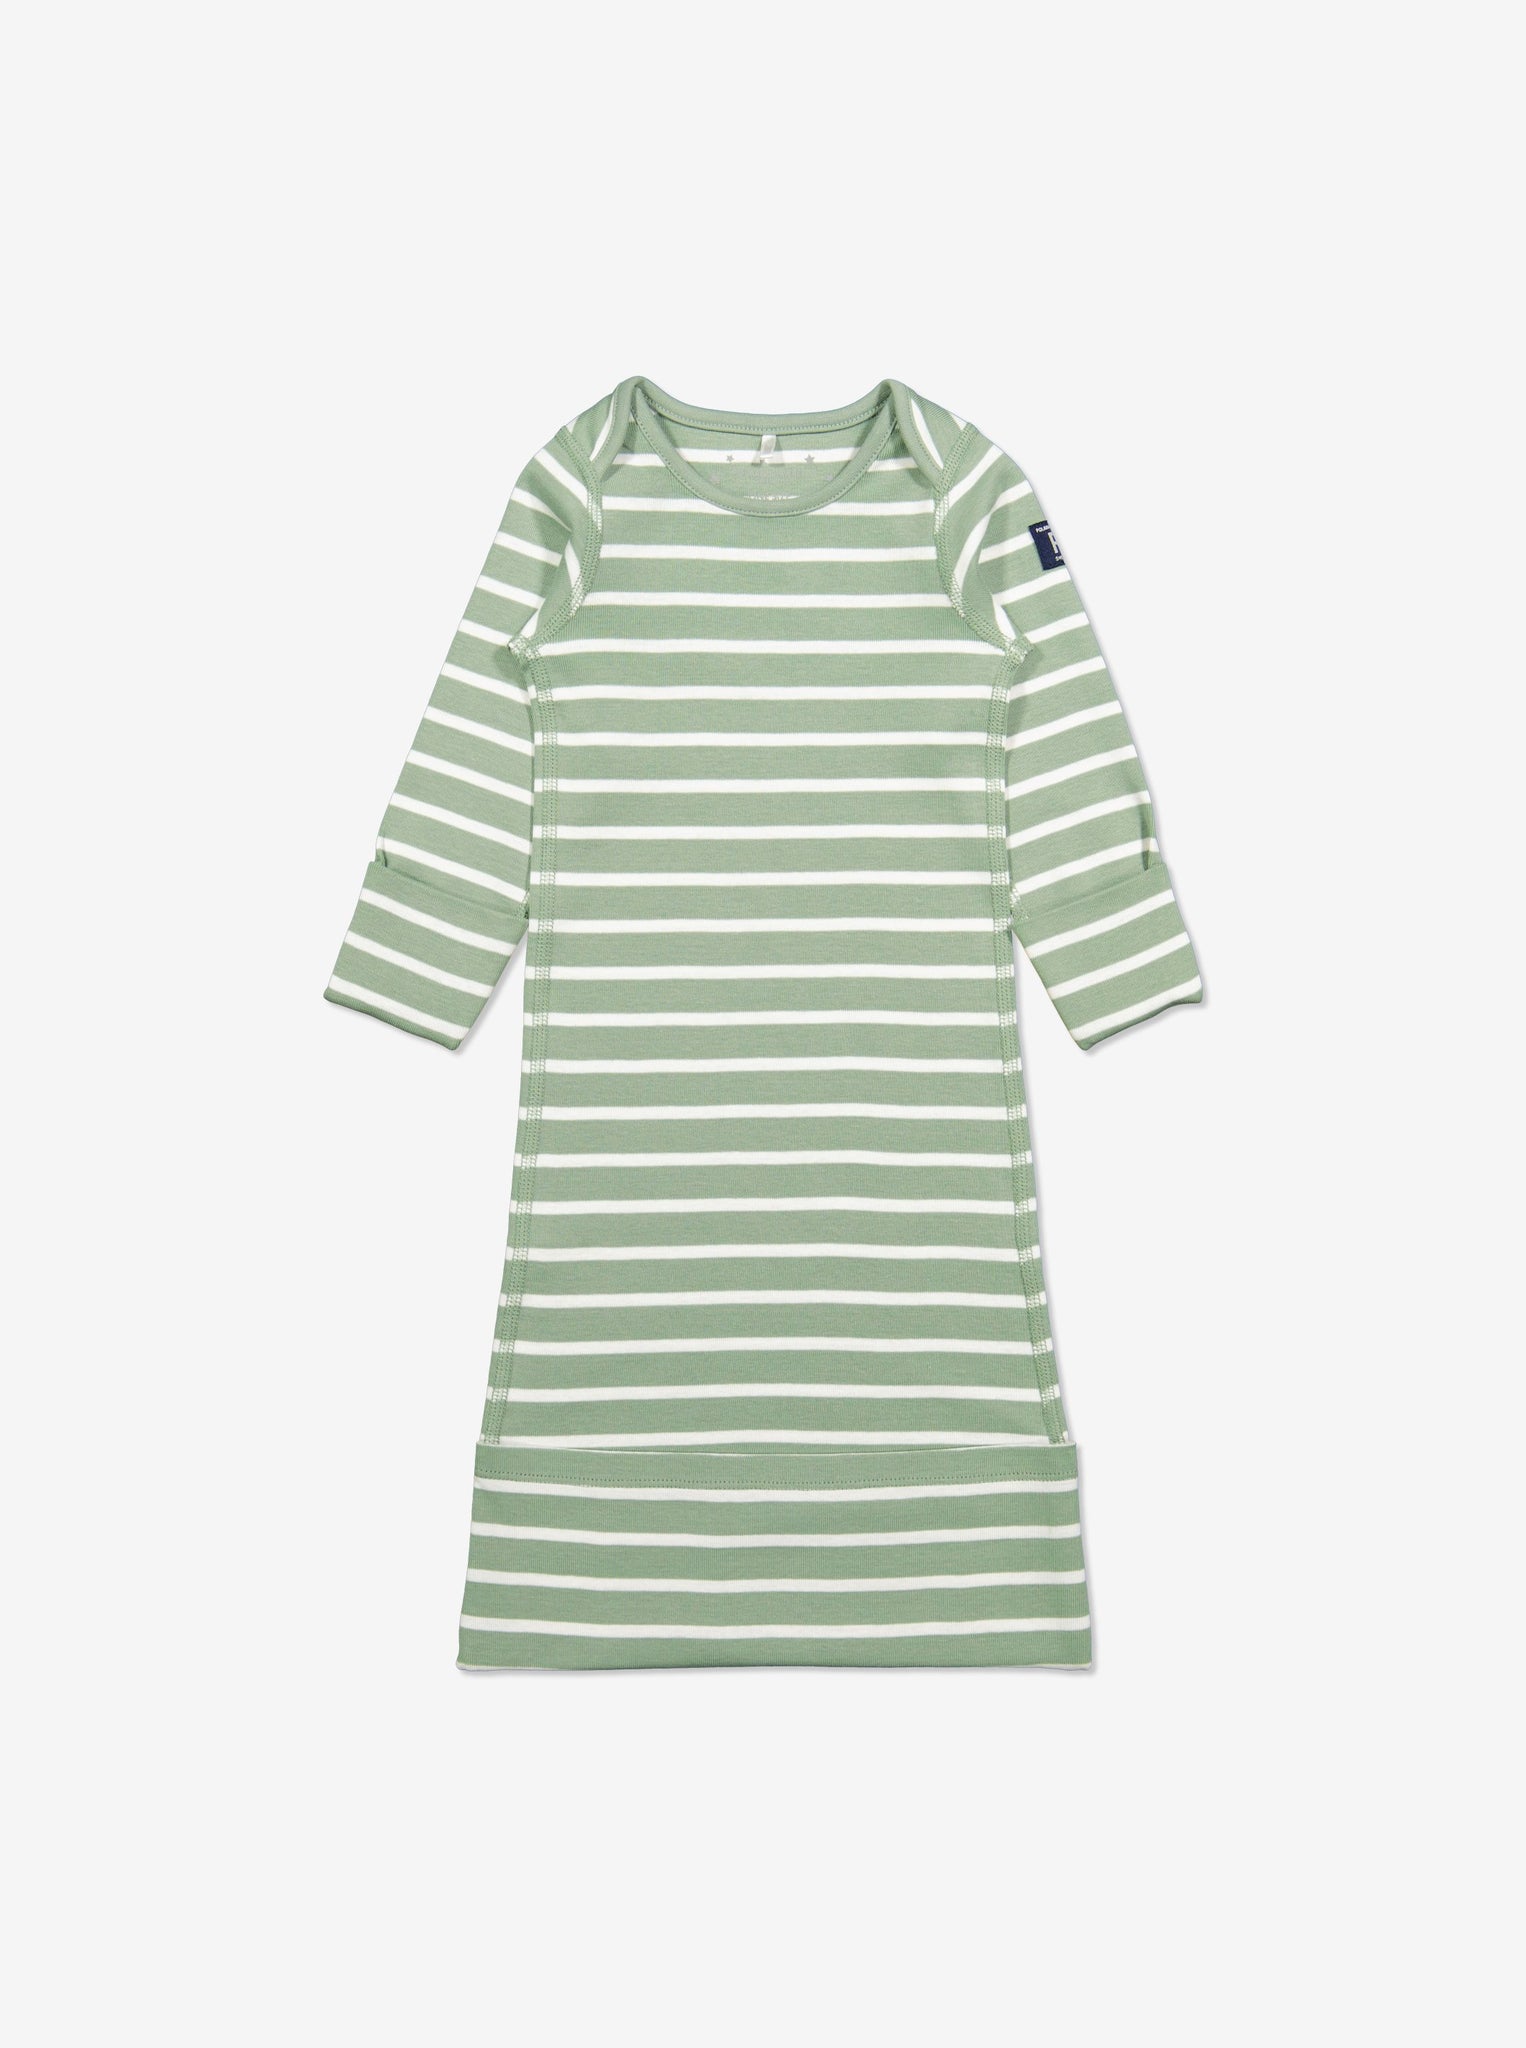  Organic Striped Green Baby Sleep Bag from Polarn O. Pyret Kidswear. Made with 100% organic cotton.